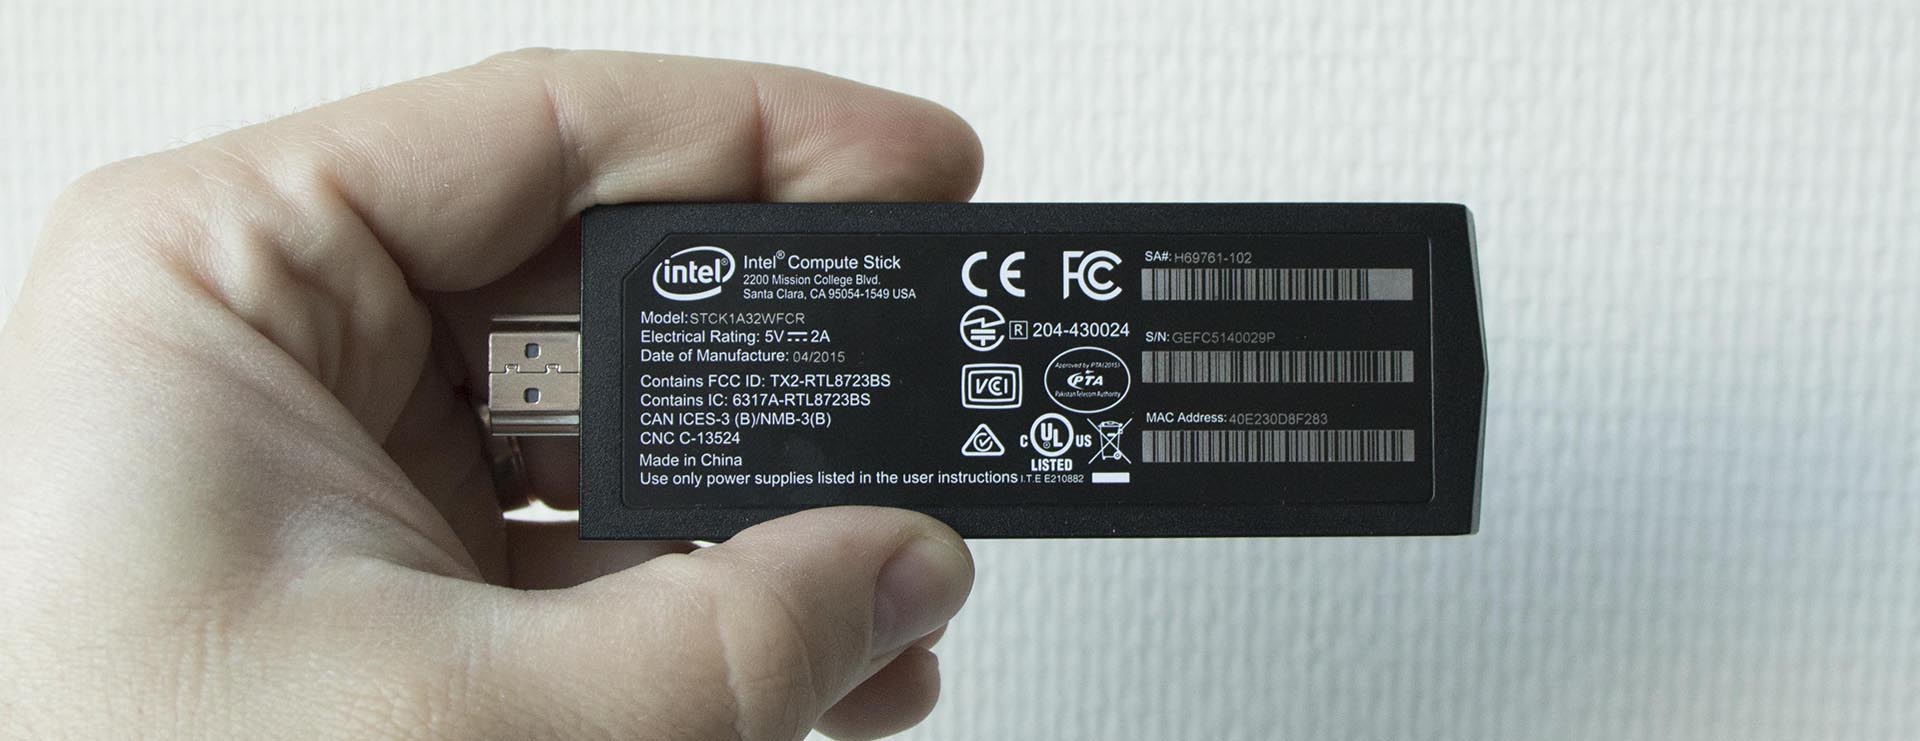 Intel Compute Stick IMG_7797